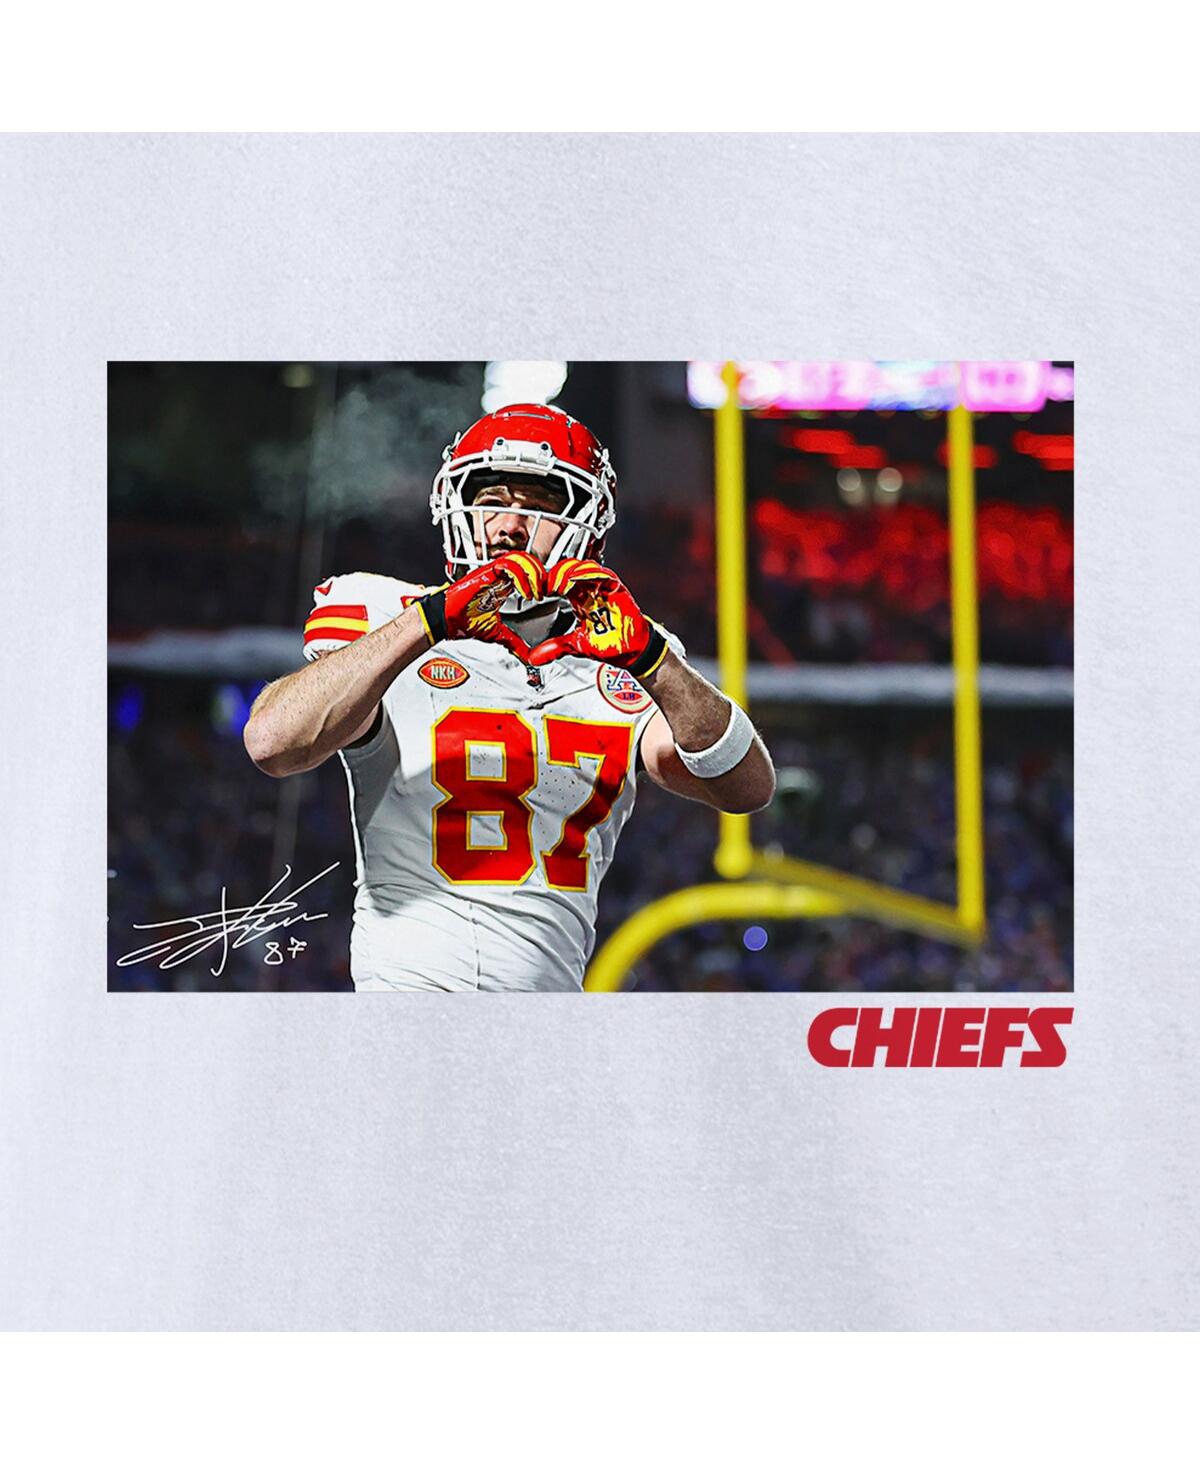 Shop Fanatics Men's And Women's Travis Kelce White Kansas City Chiefs Player Graphic T-shirt